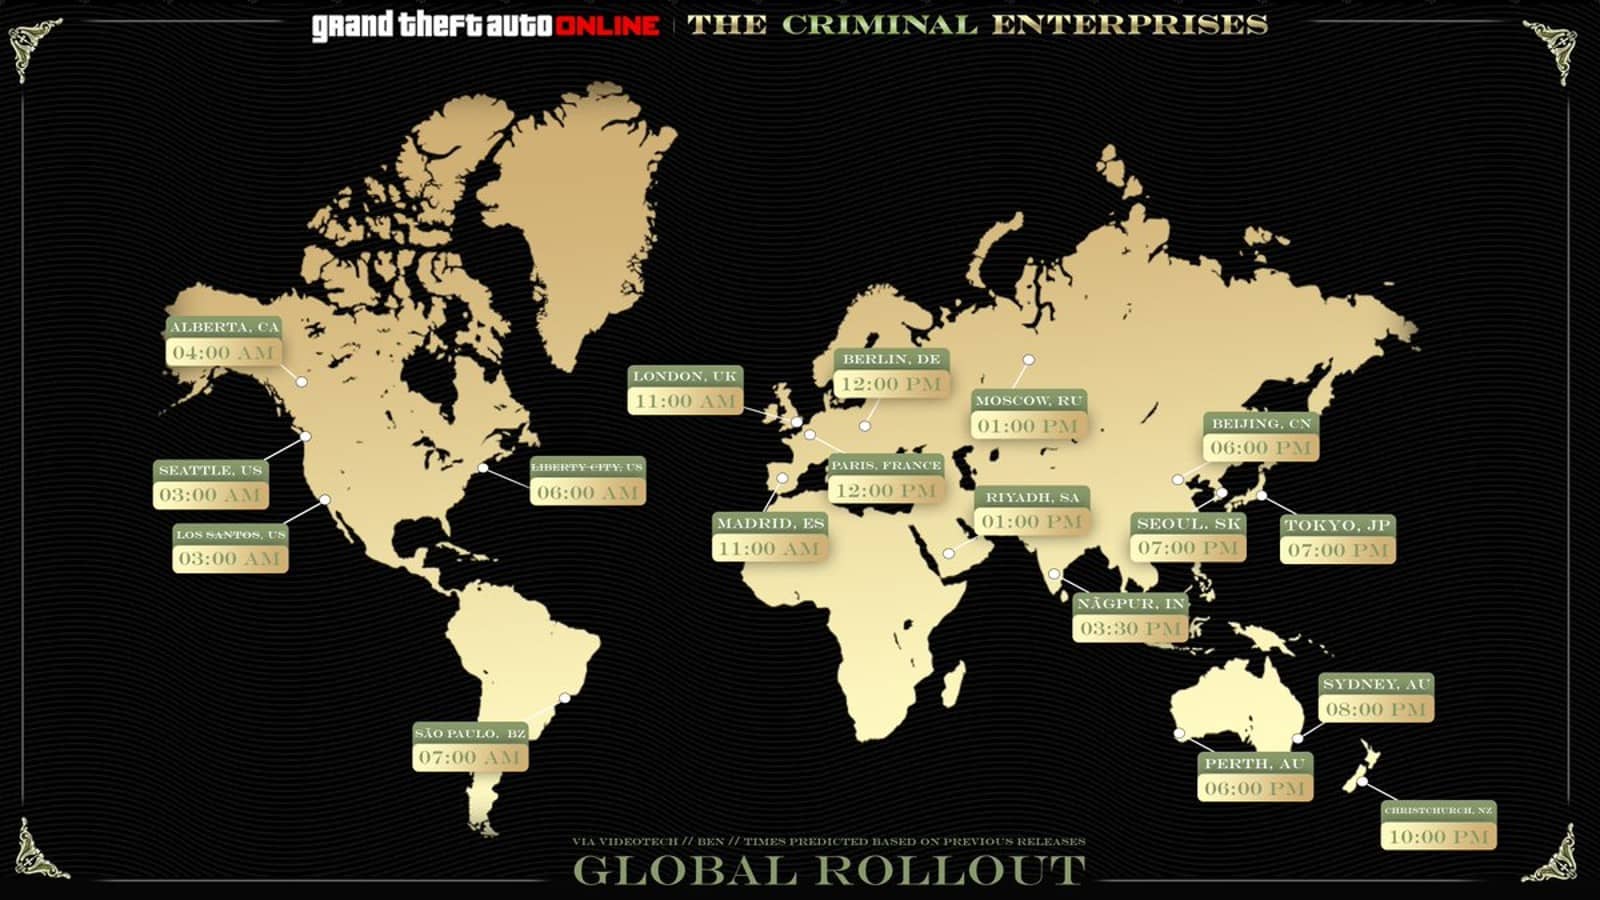 GTA Online - The Criminal Enterprises